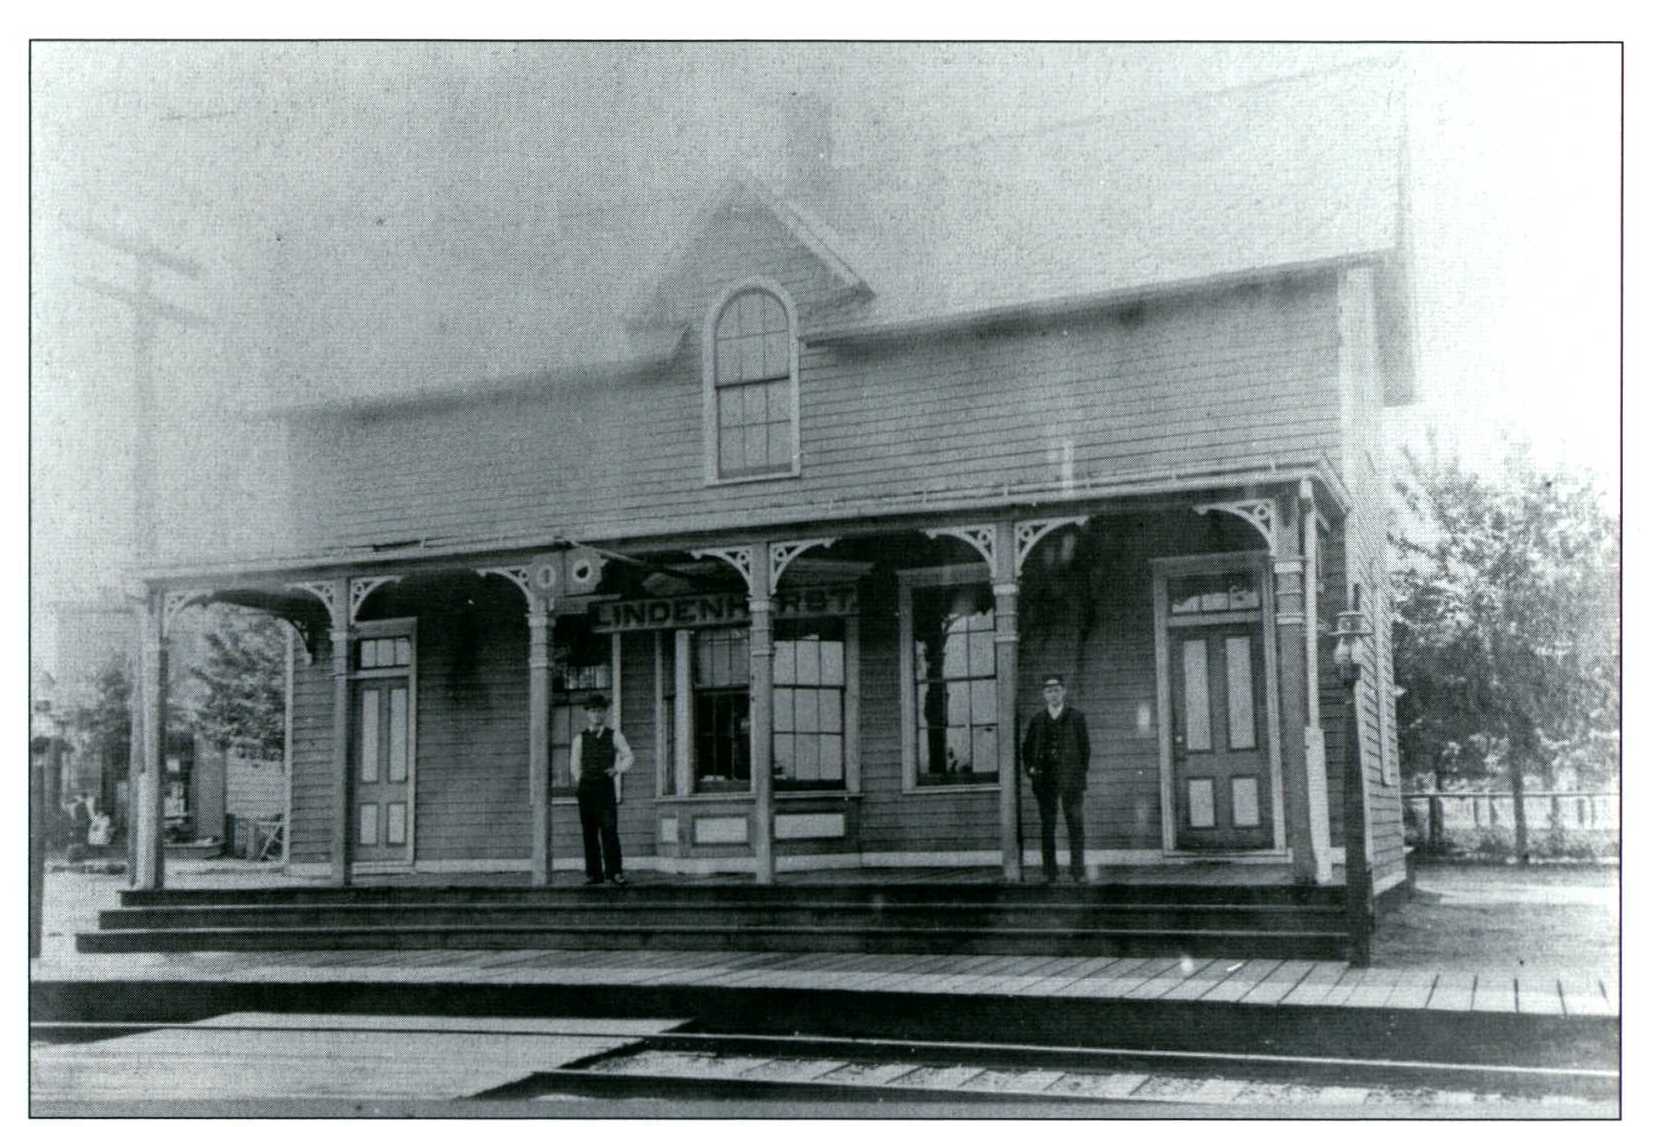 Black and white photo of Lindenhurst railroad station. 